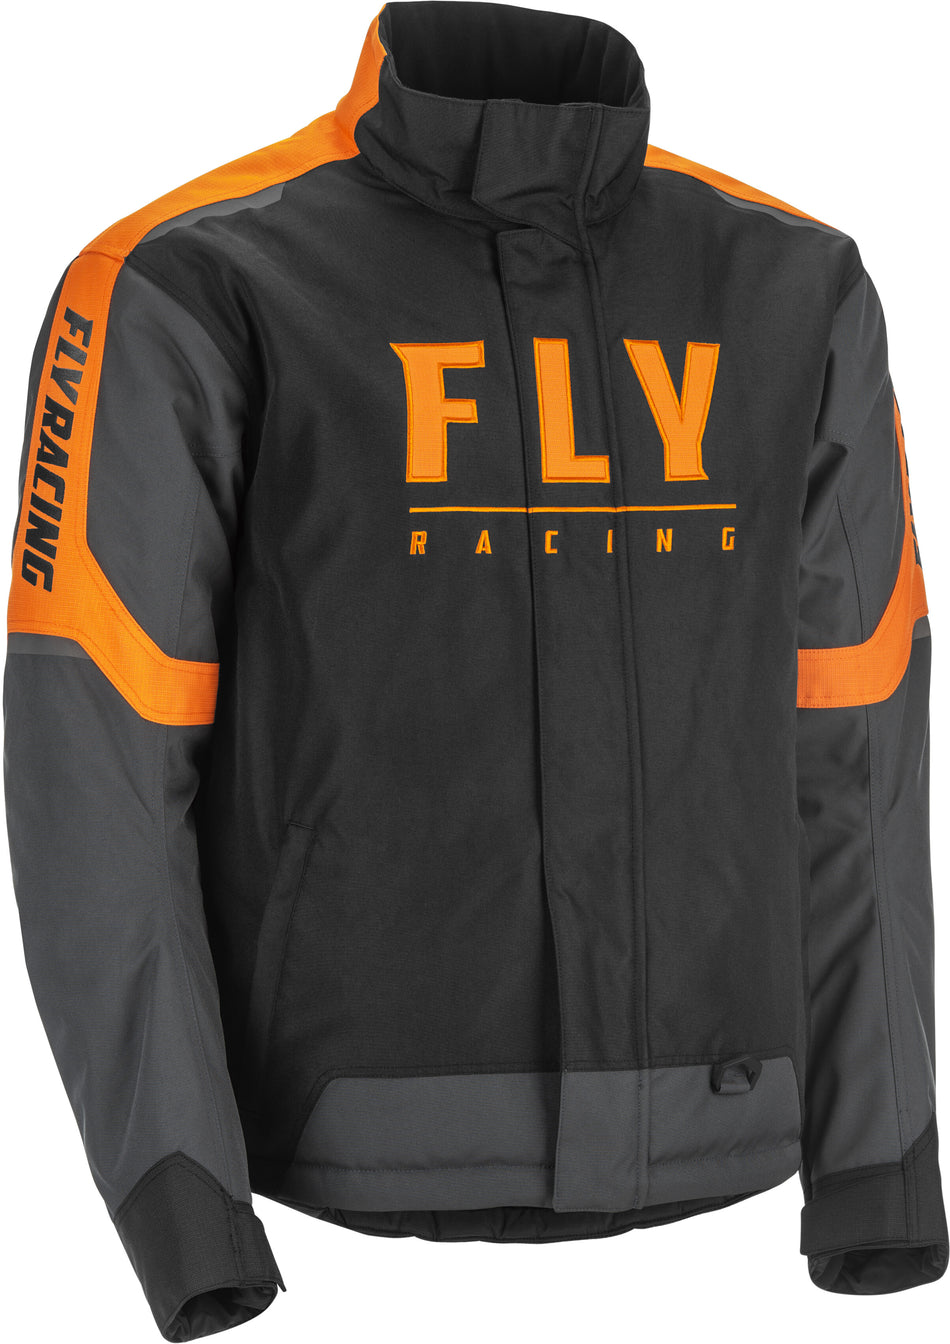 FLY RACING Outpost Jacket Black/Grey/Orange Md 470-4142M